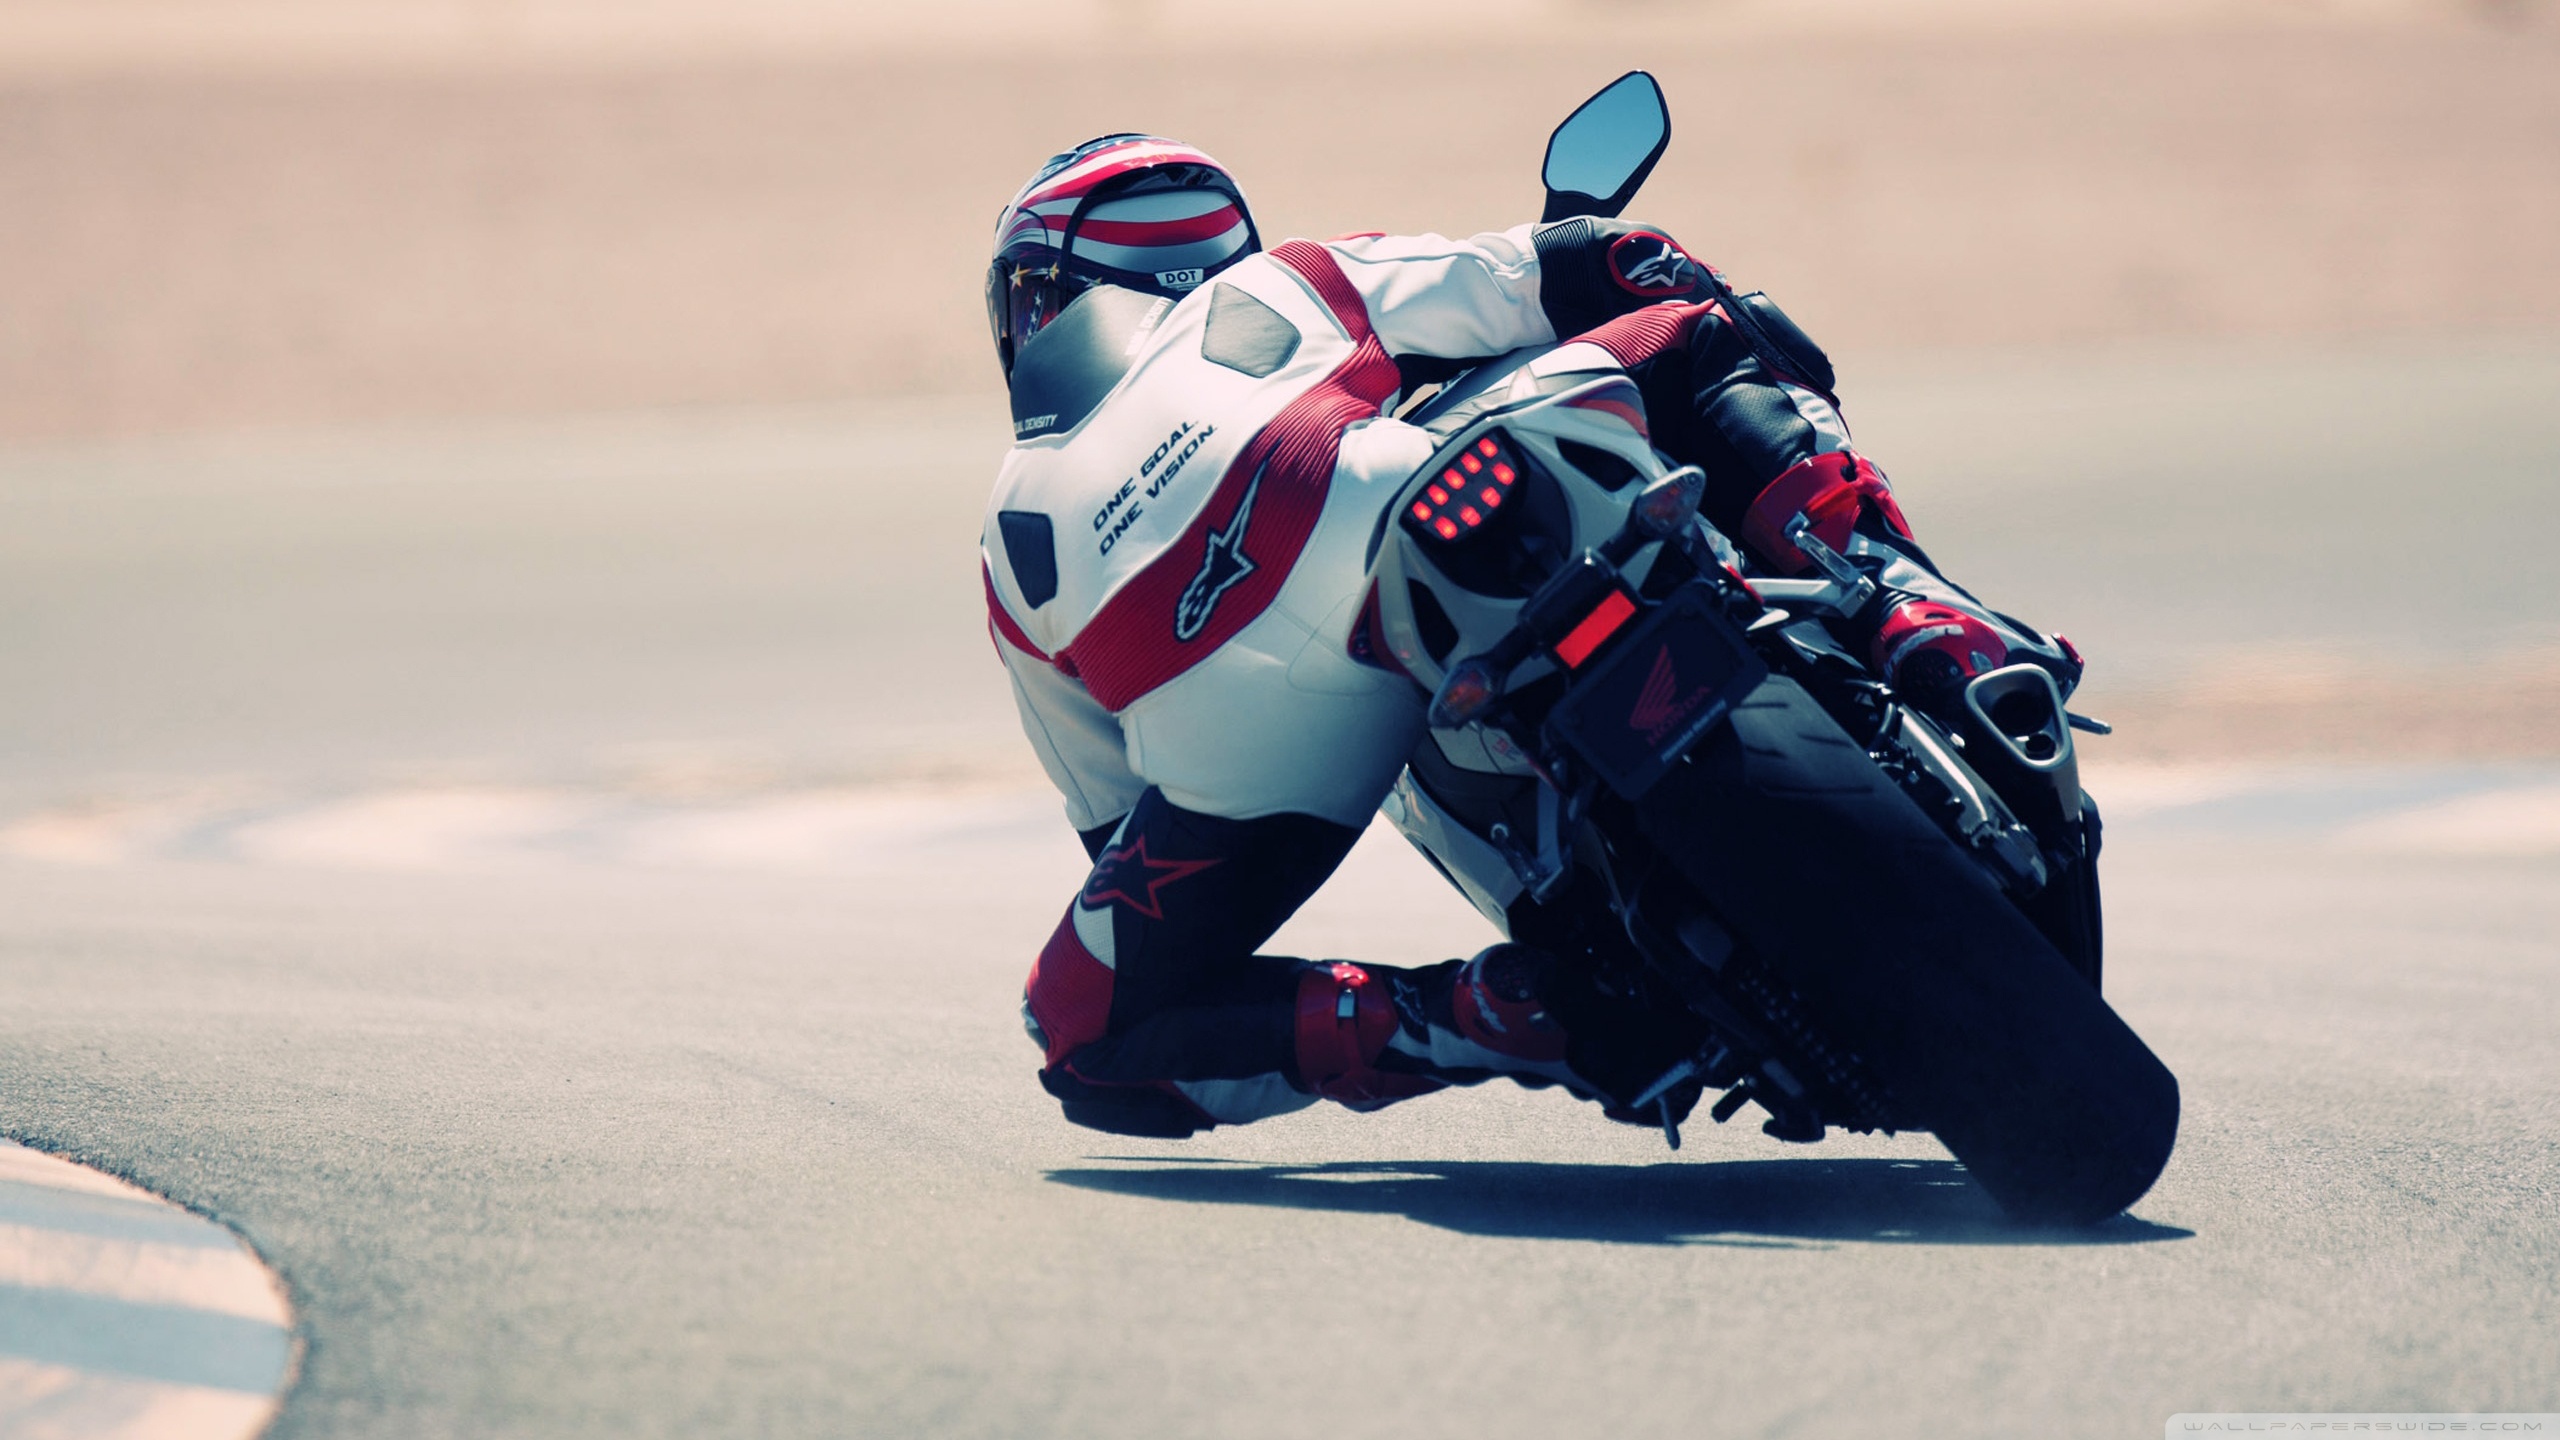 WallpapersWidecom Motorcycle Racing HD Desktop Wallpapers For